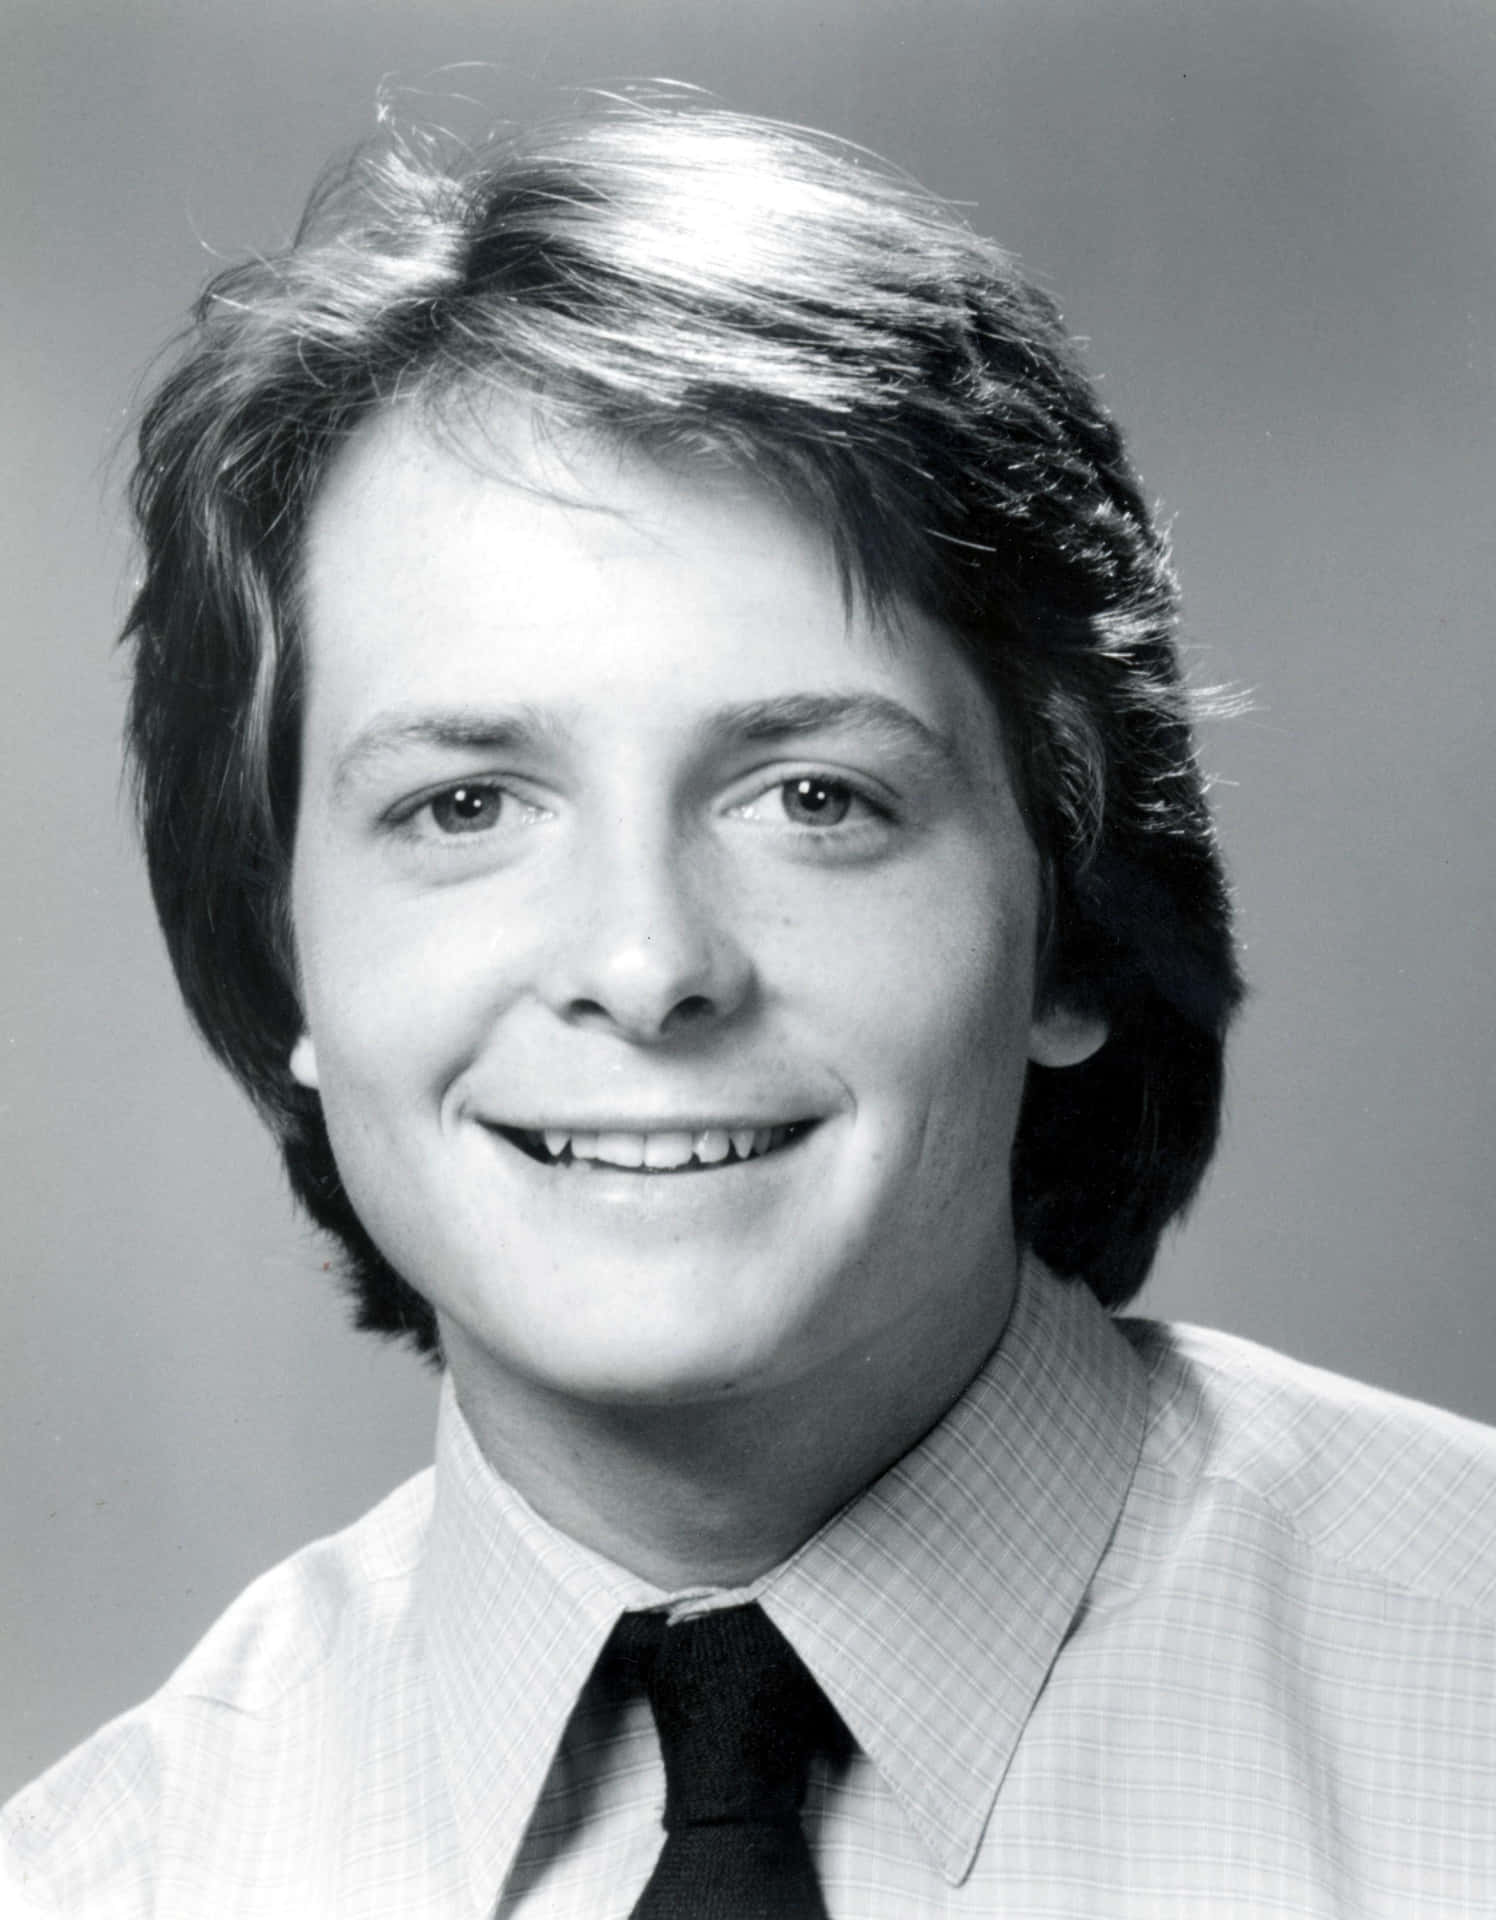 Michael J Fox, Legendary Actor And Parkinson's Disease Advocate. Background